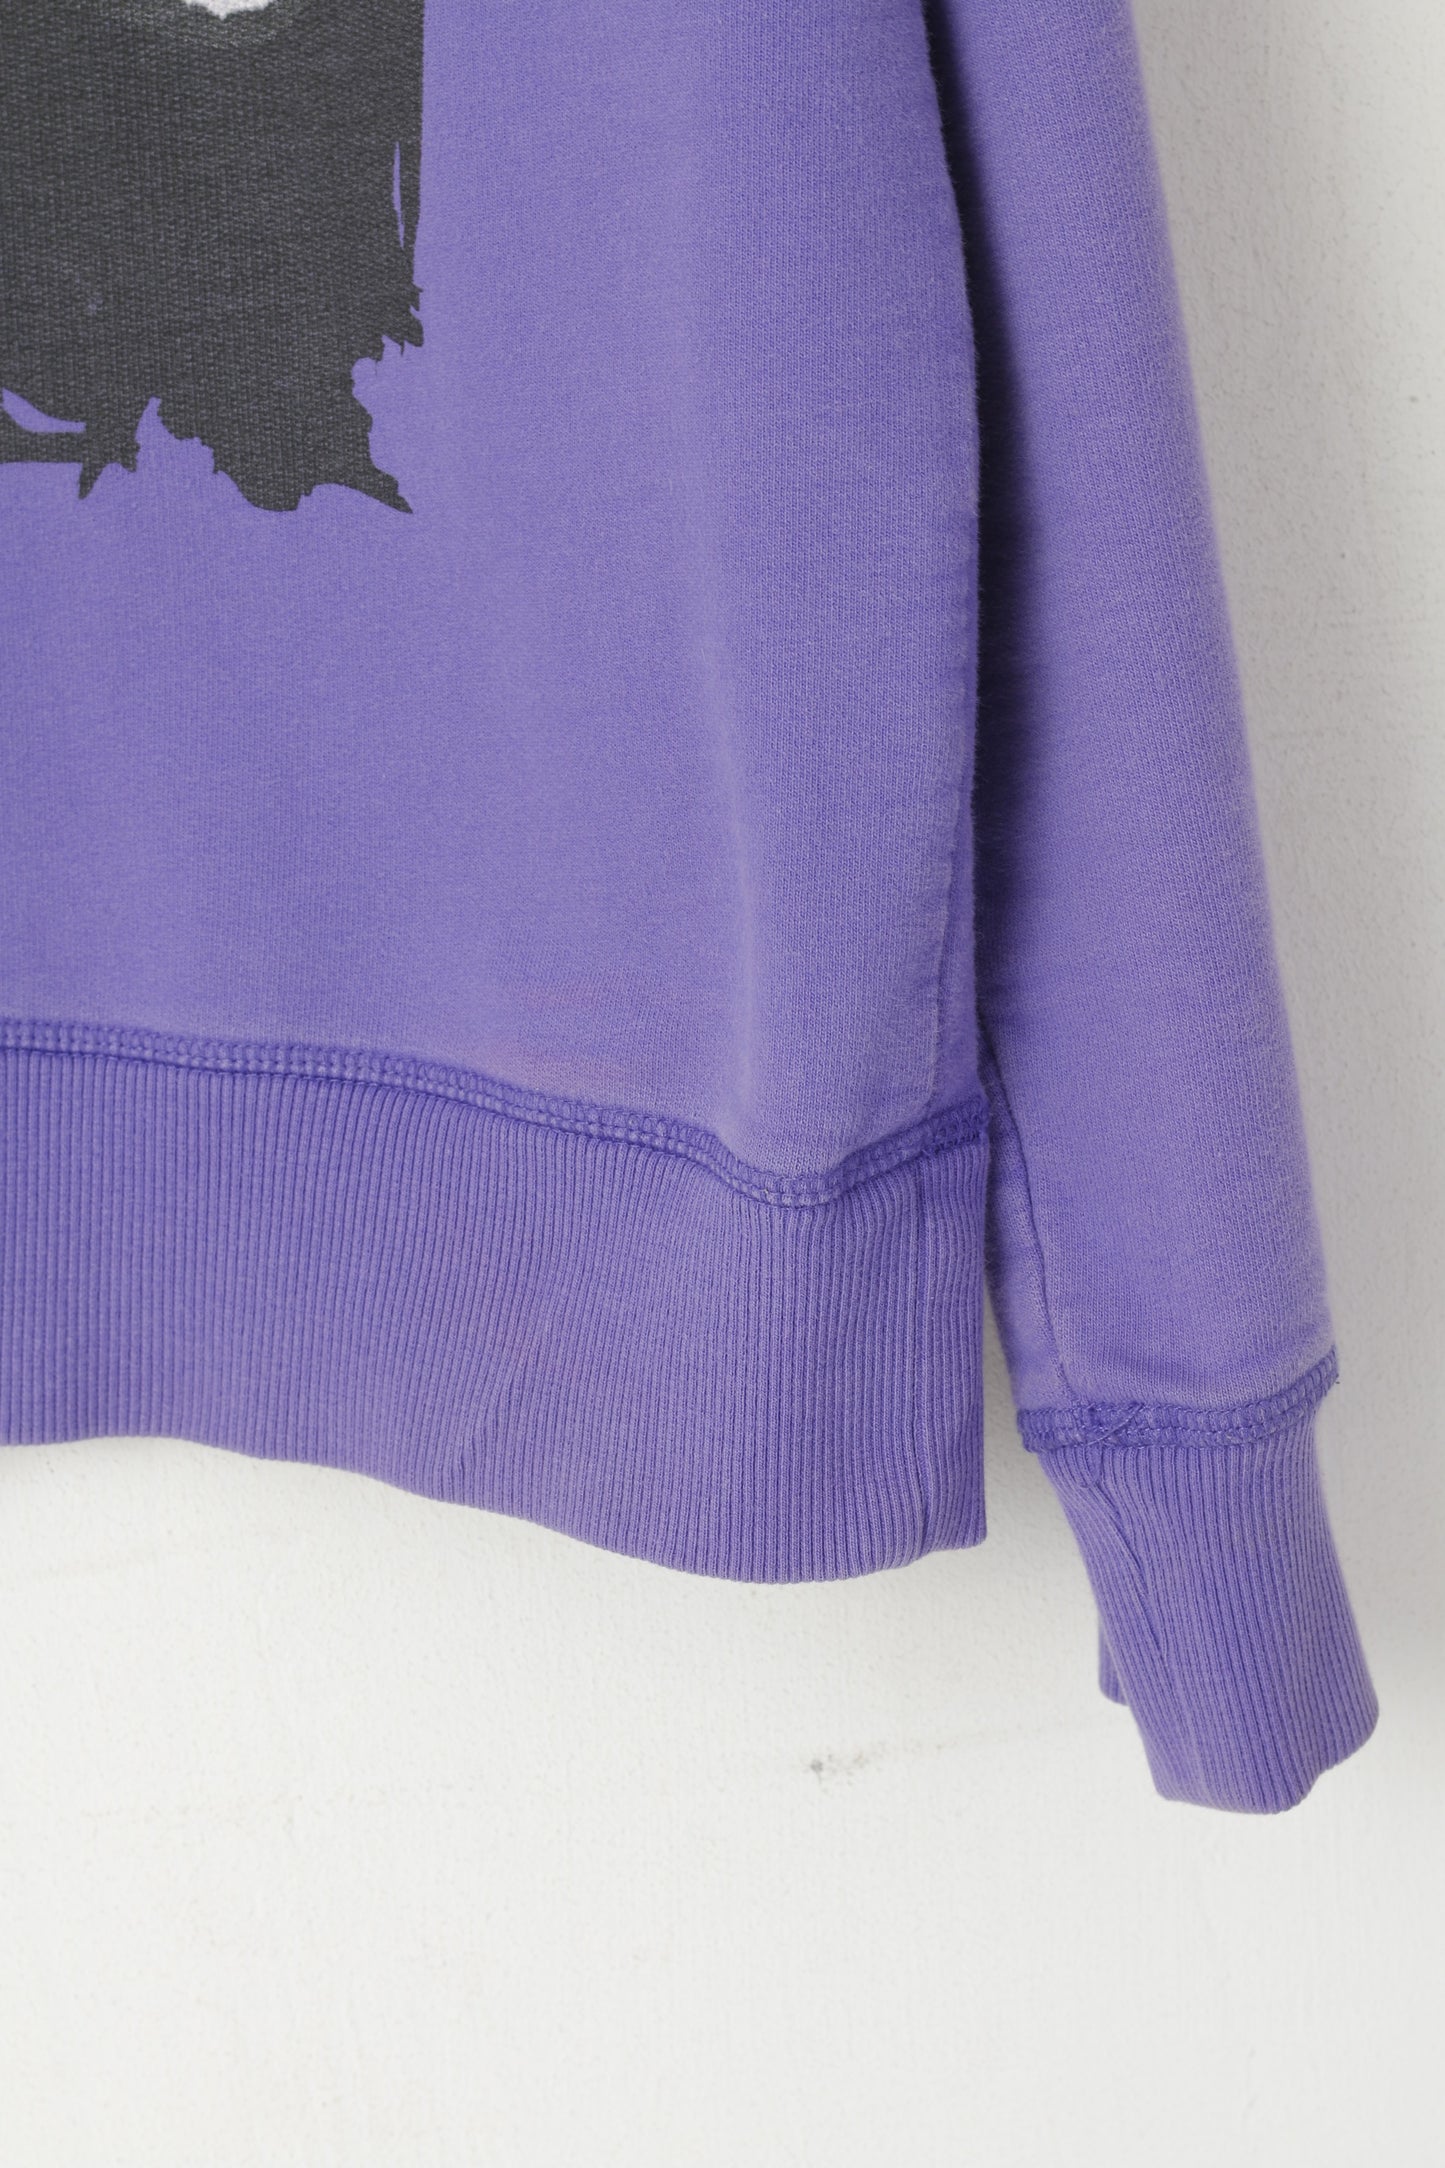 Projekts $ Men L Sweatshirt Violet Coton Dollars Make Dreams NYC Blouse Top